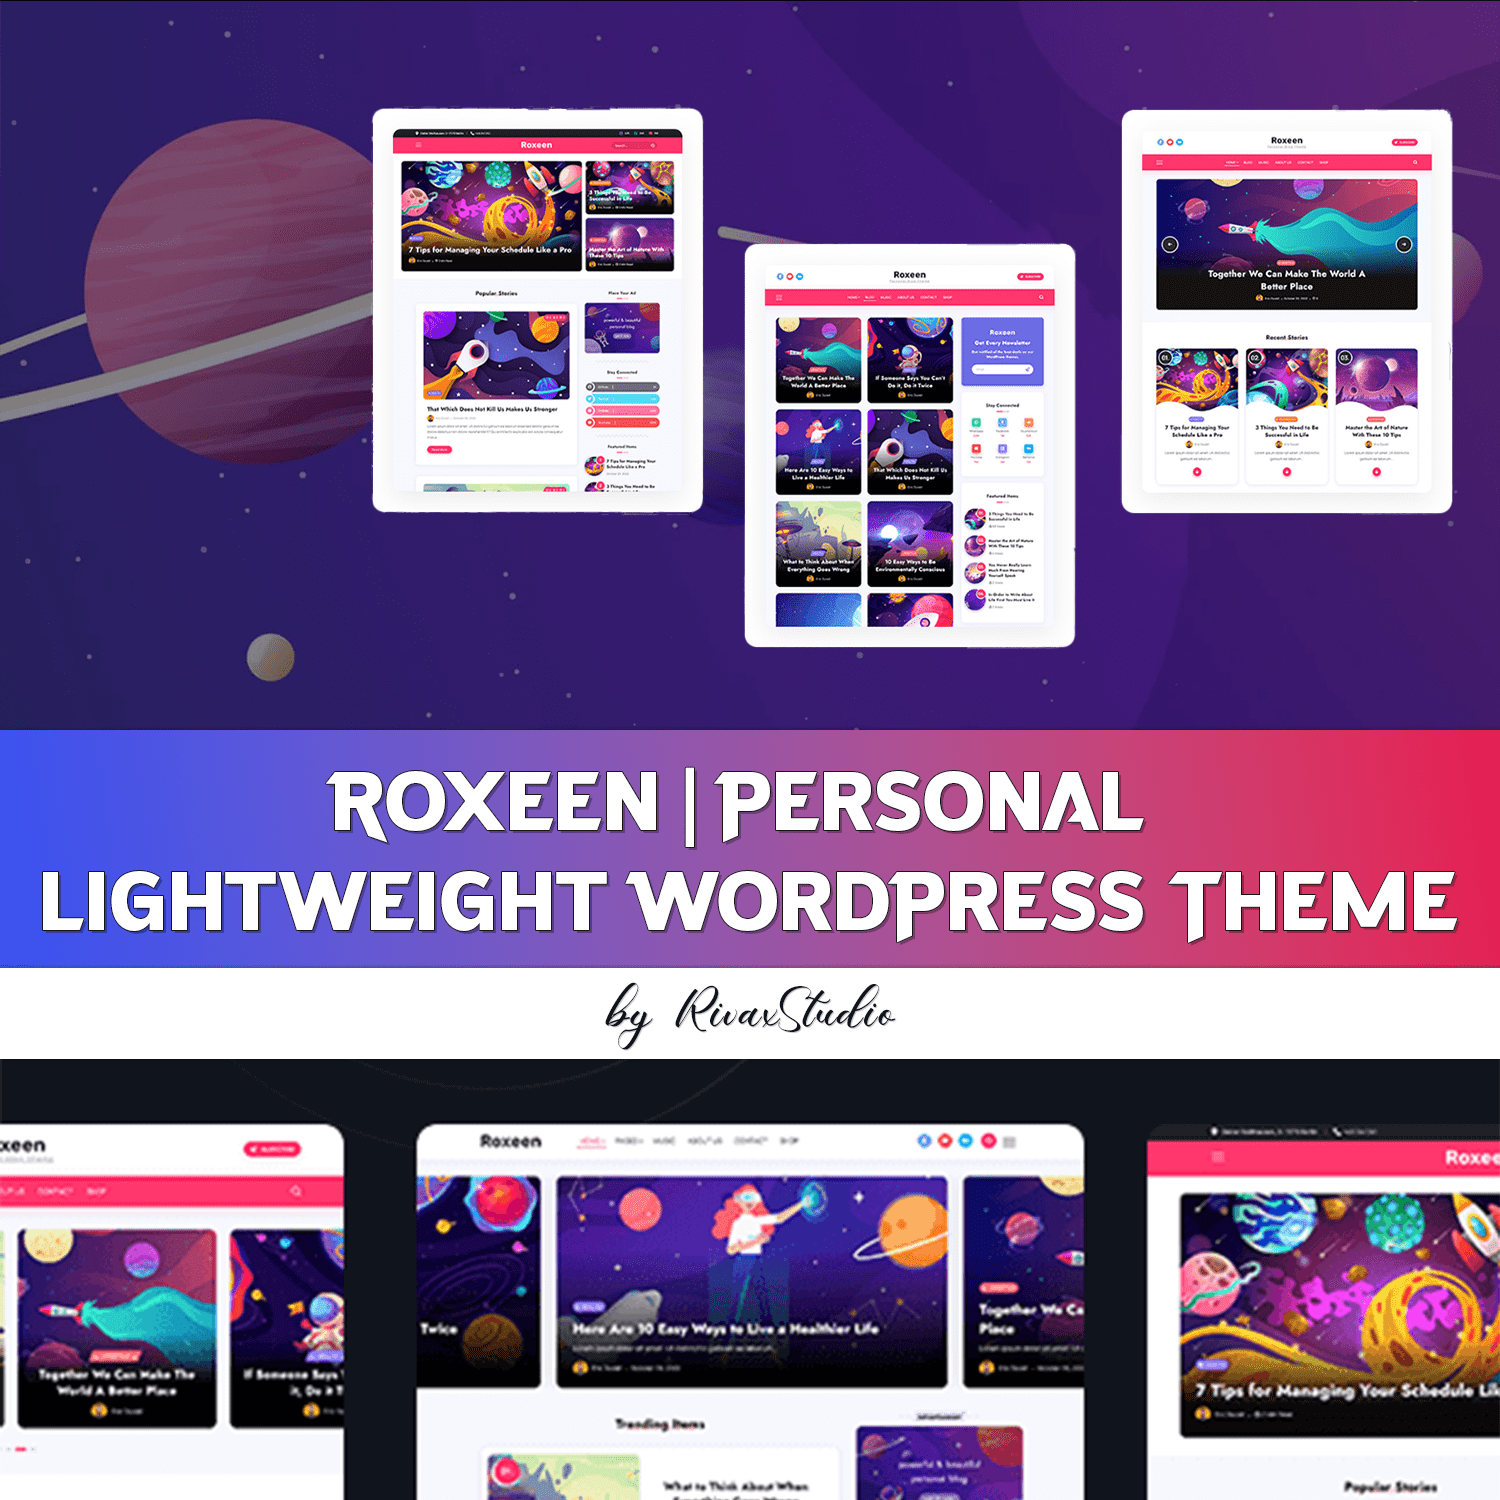 Roxeen | Personal Lightweight WordPress Theme cover.